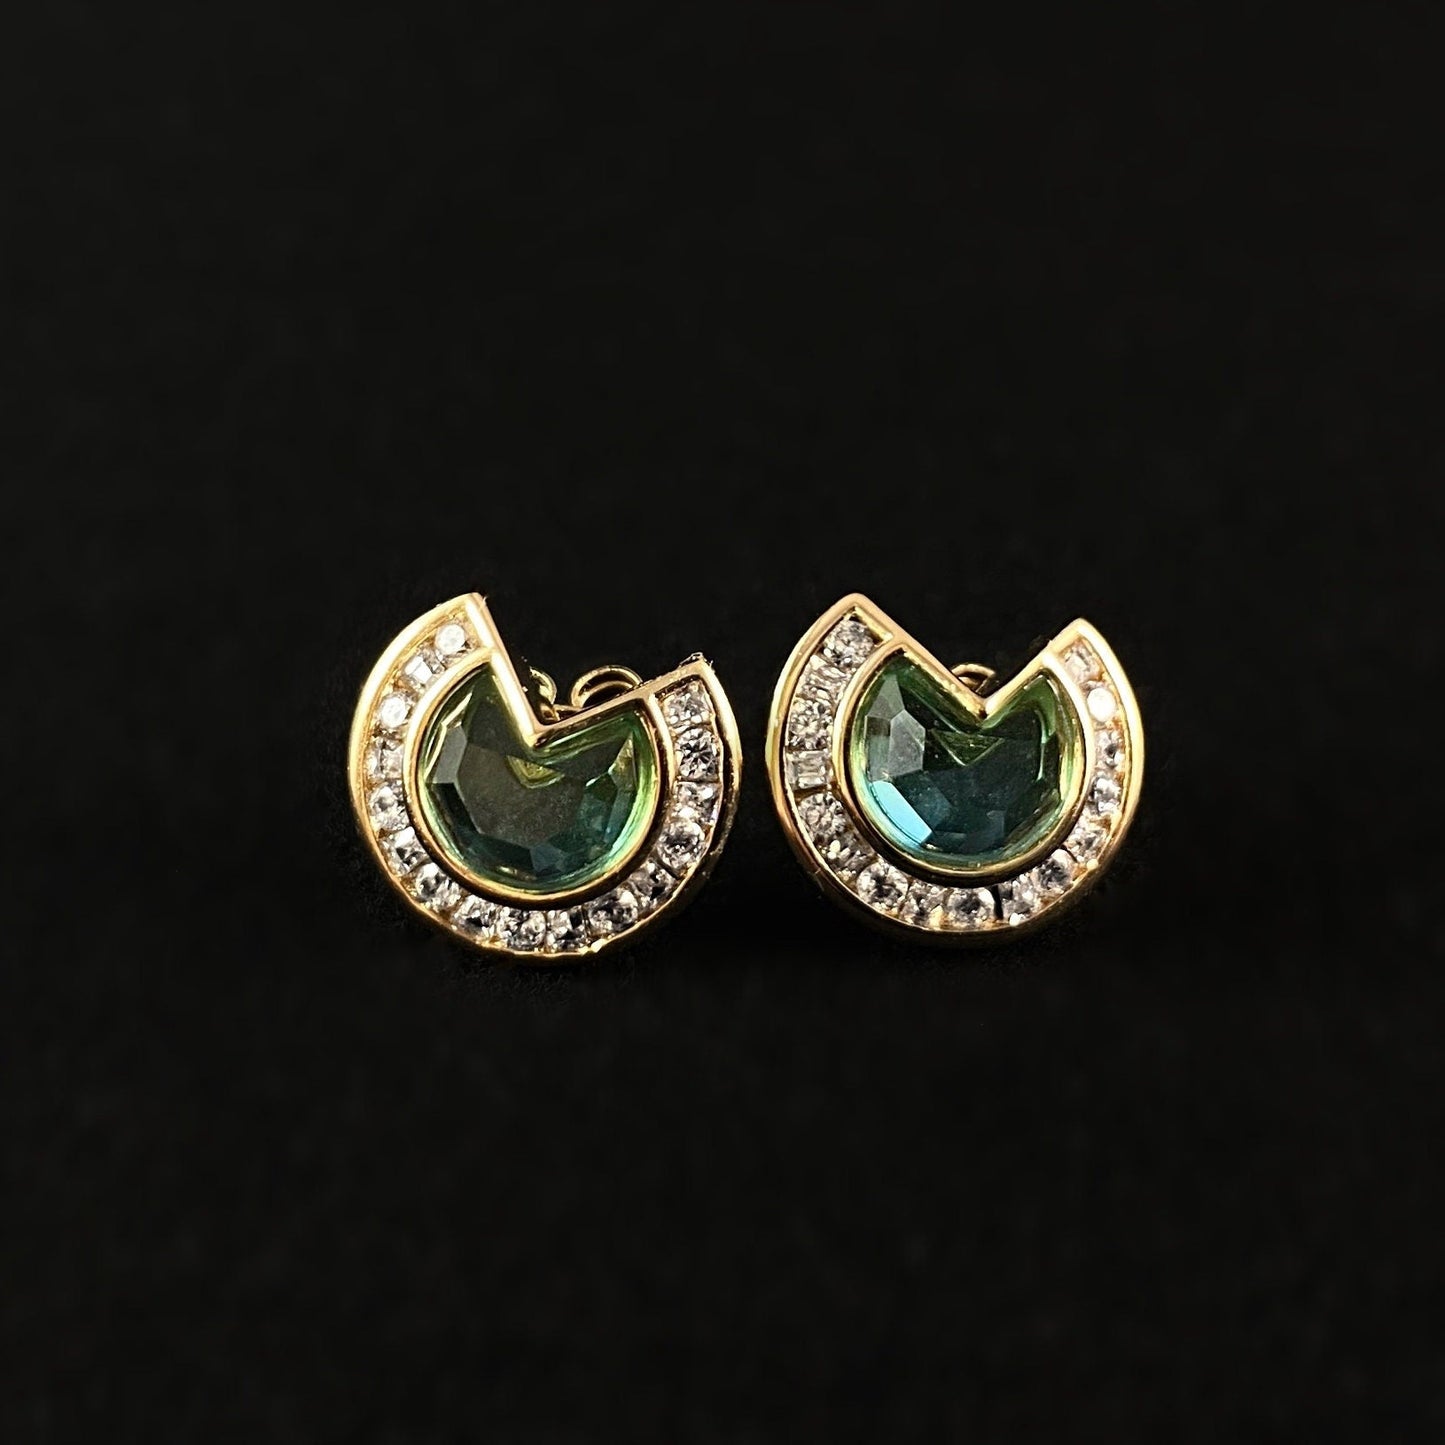 1920s Gold Statement Stud Earrings with Green/Blue Quartz Stone - Daybreak Sky